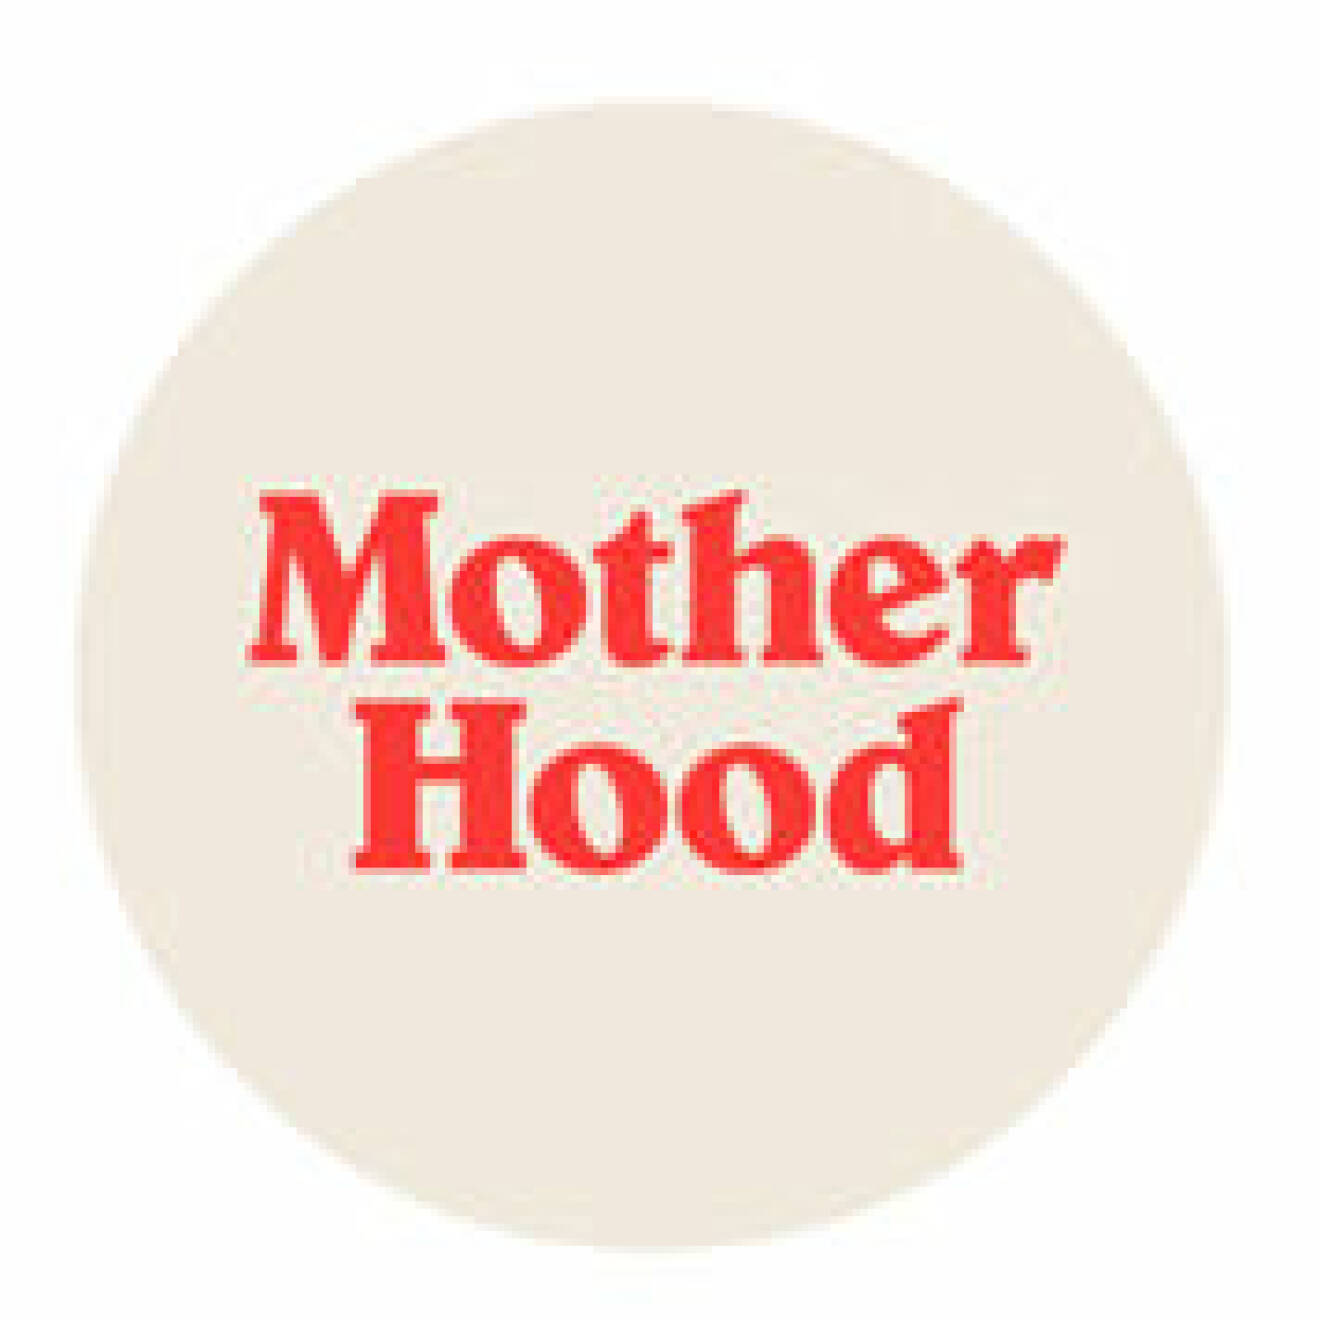 https://image.motherhood.se/redaktionen-cirkel.jpg?imageId=2581249&x=0&y=0&cropw=100&croph=100&width=1318&height=1318